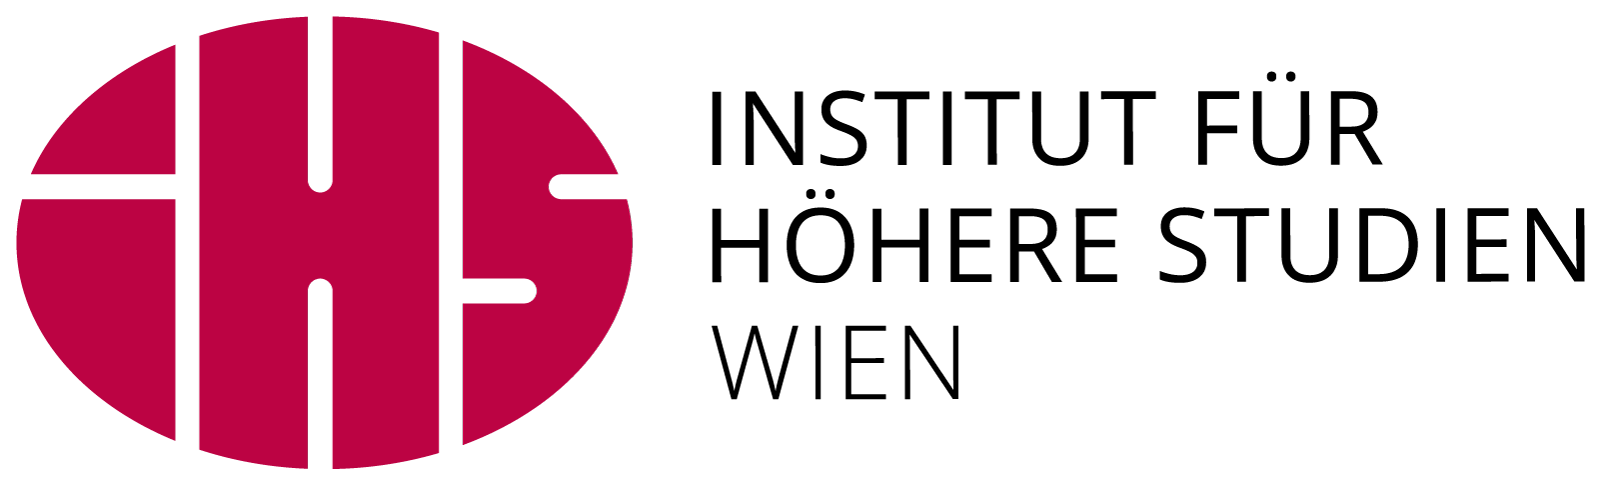 IHS Logo D Wien rgb